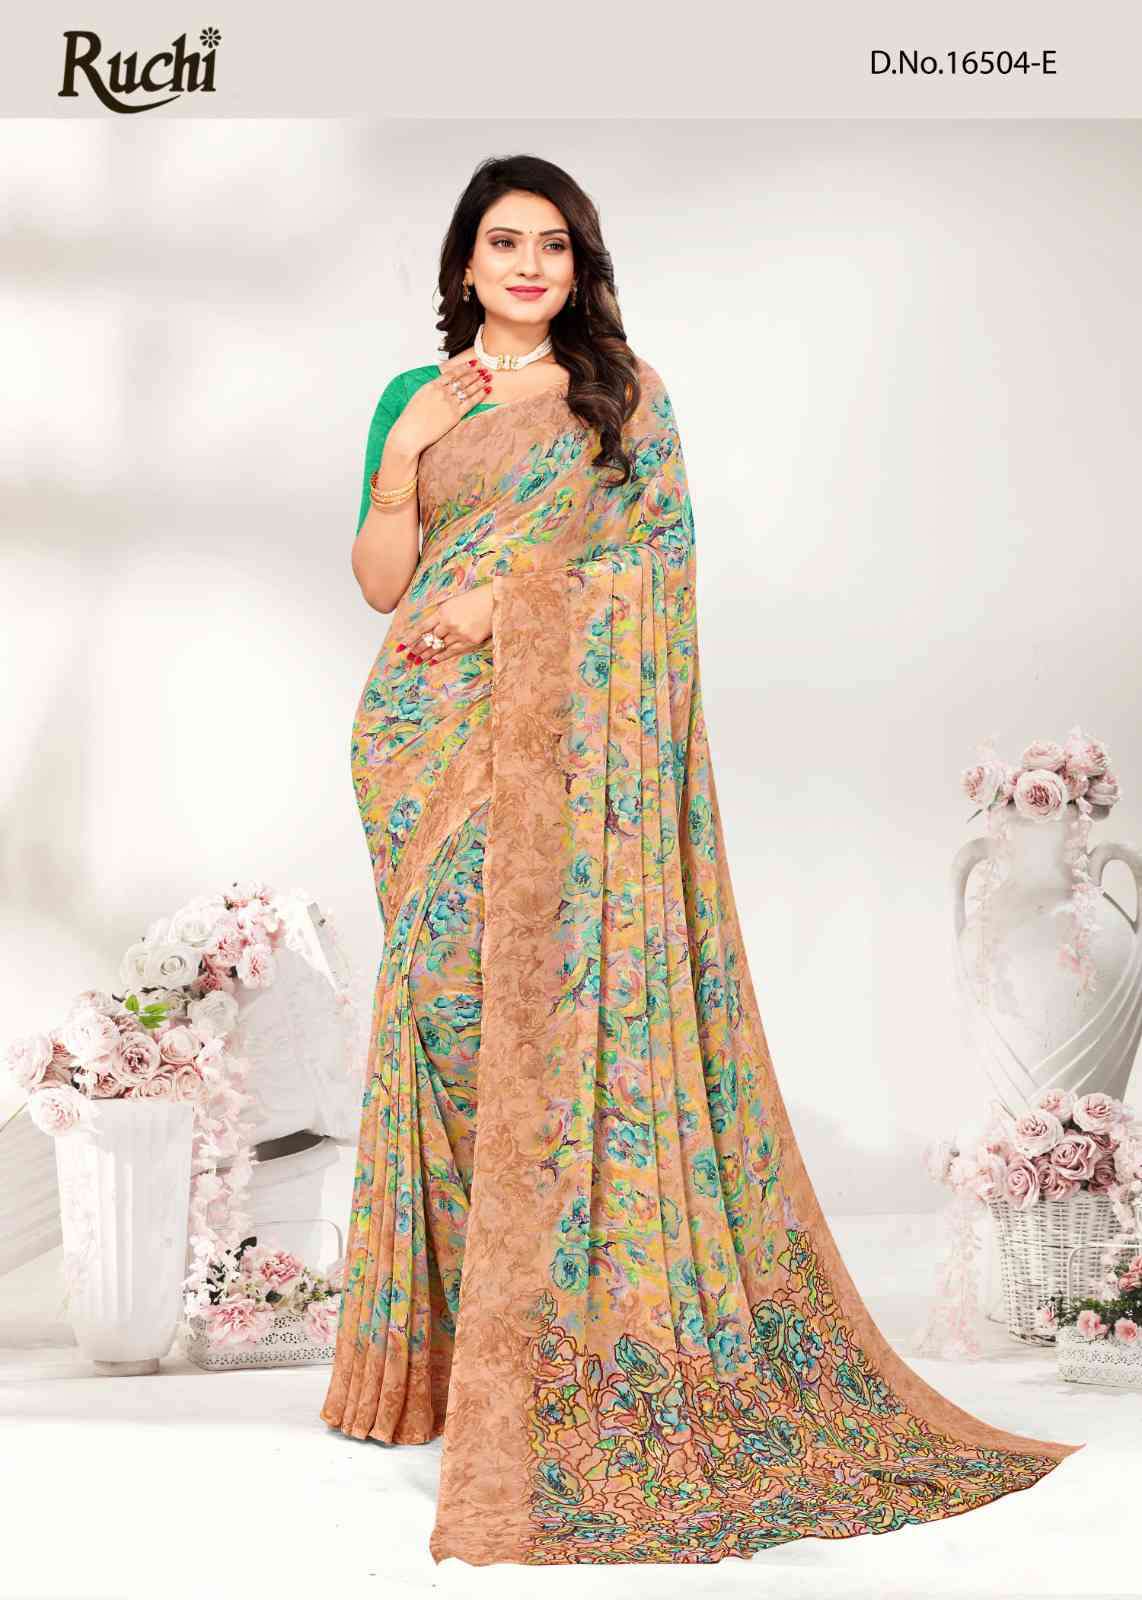 Ruchi Saree Raga Georgette Vol 2 Exclusive Flower Print Daily To Wear Saree Catalog Dealers